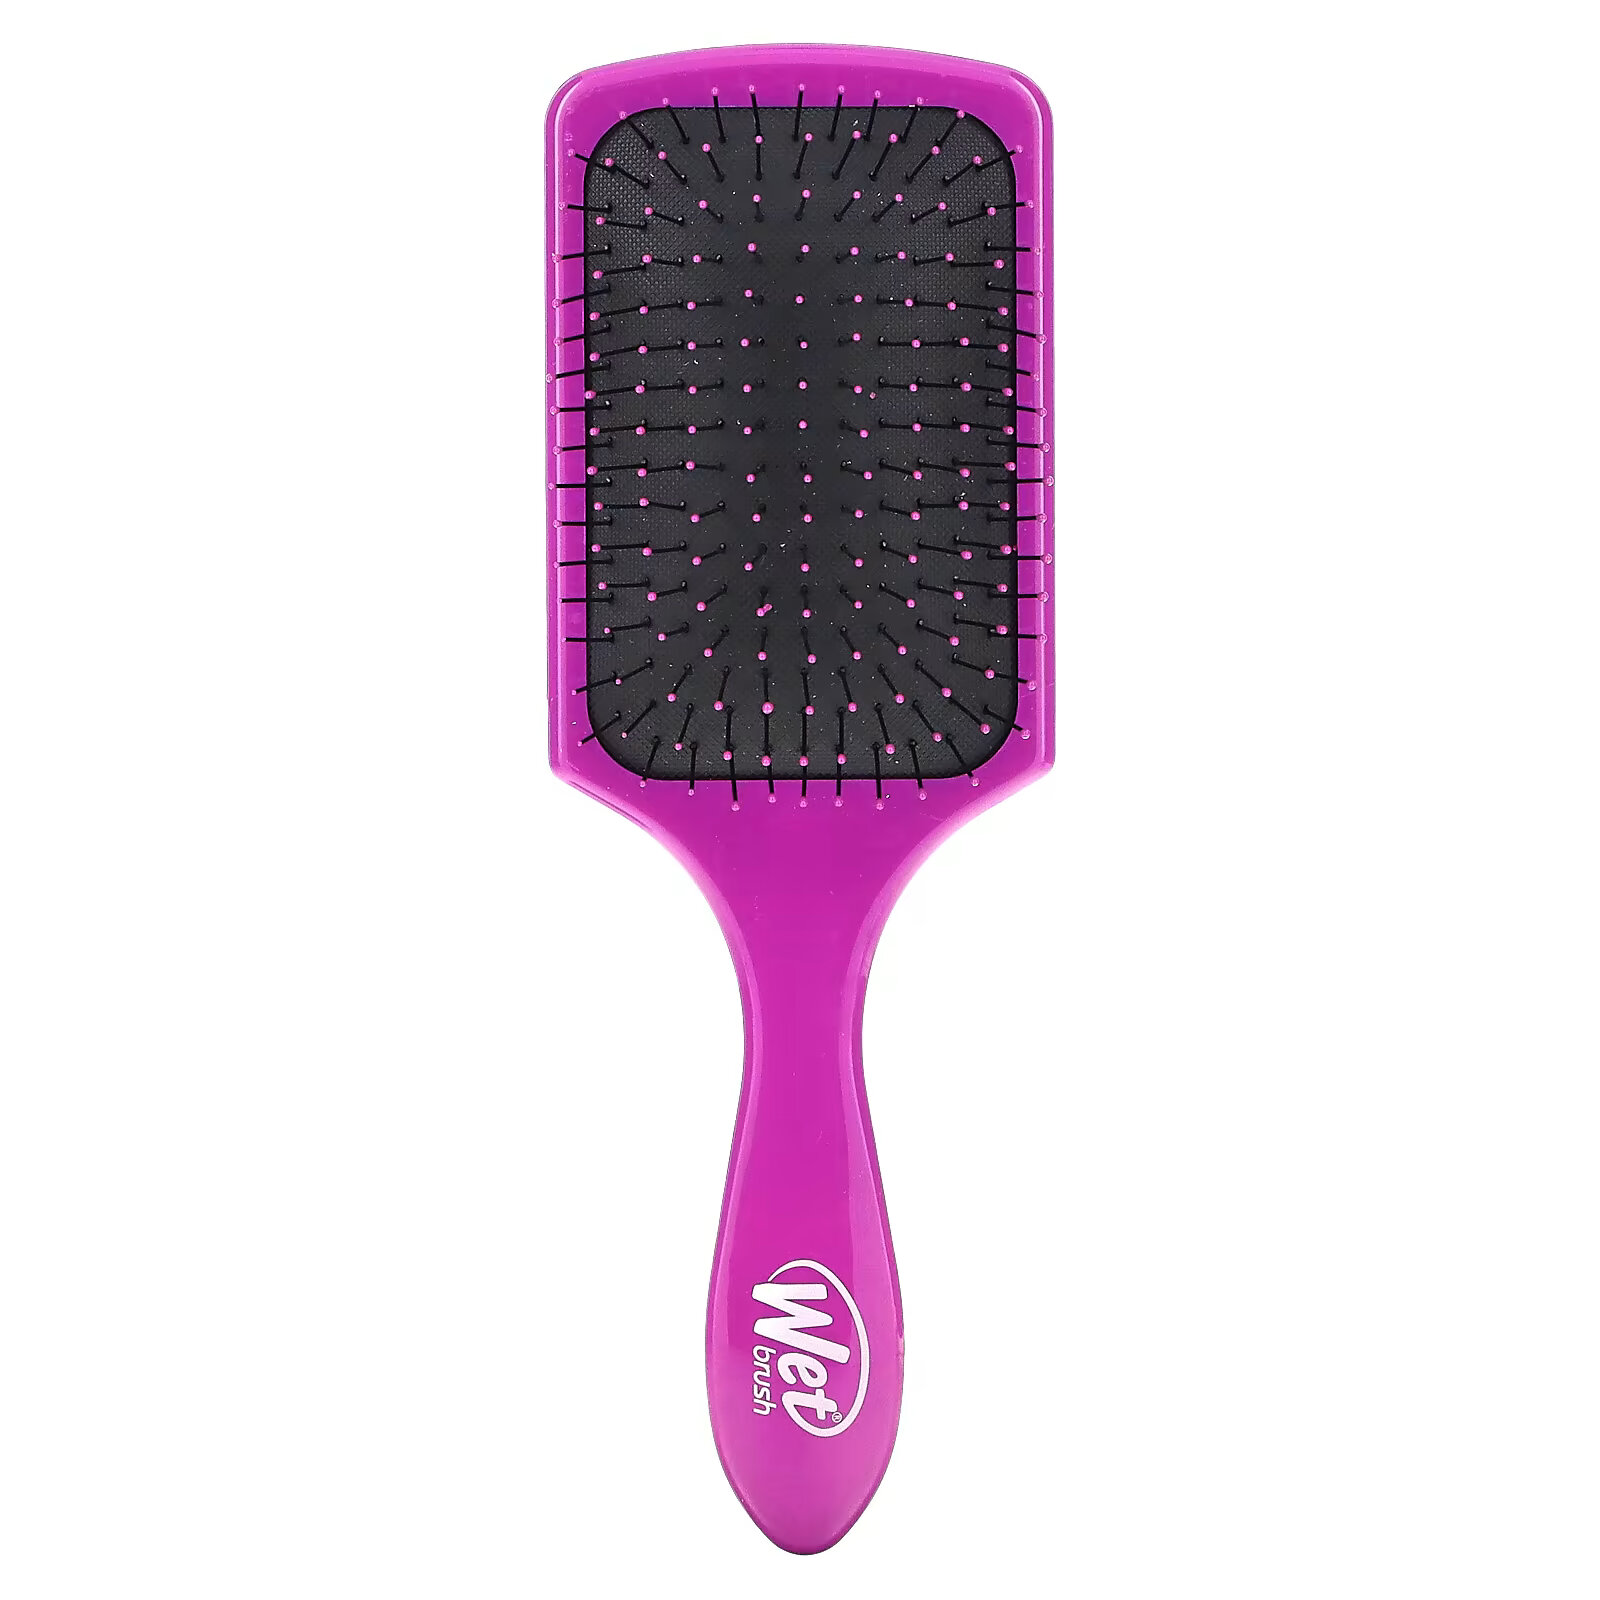 Wet Brush, Paddle Detangler Brush, щетка для легкого расчесывания, пурпурный, 1 шт.